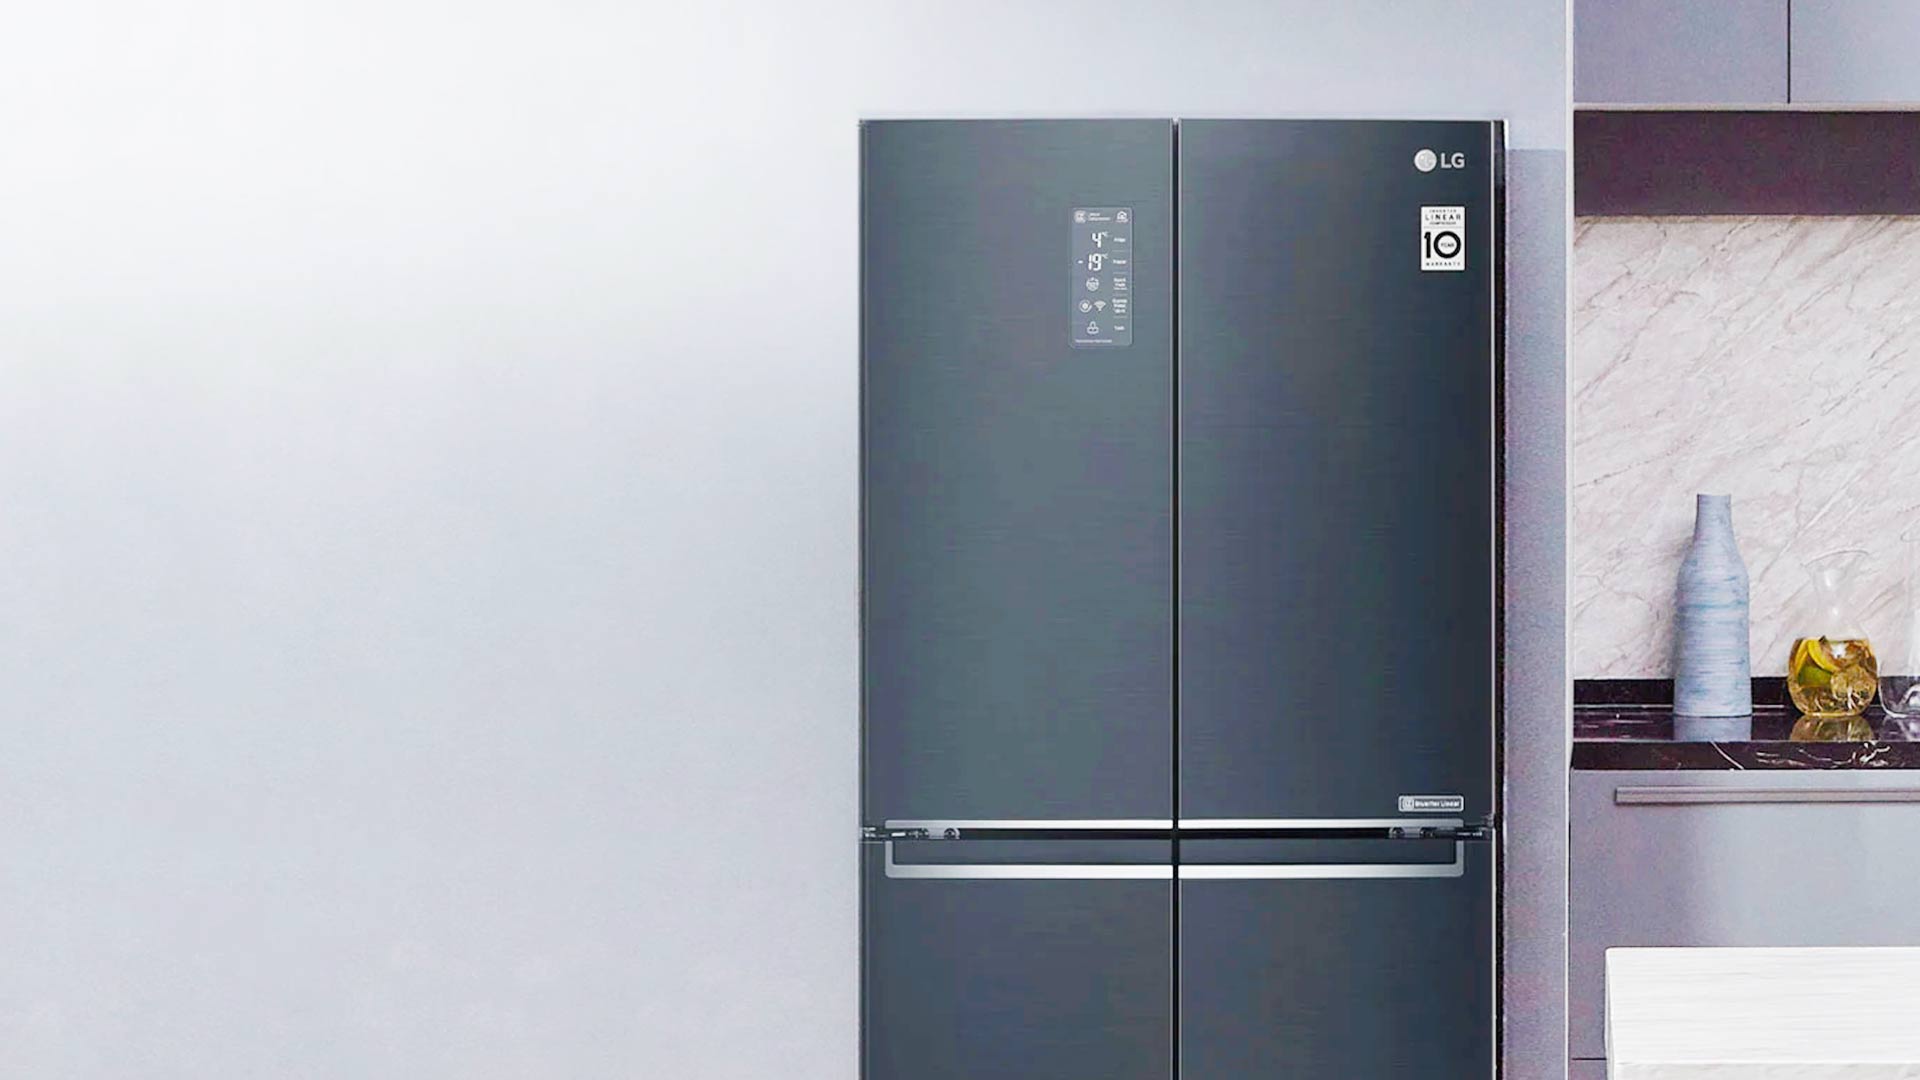 LG Refrigerator Repair Service | LG Appliance Service